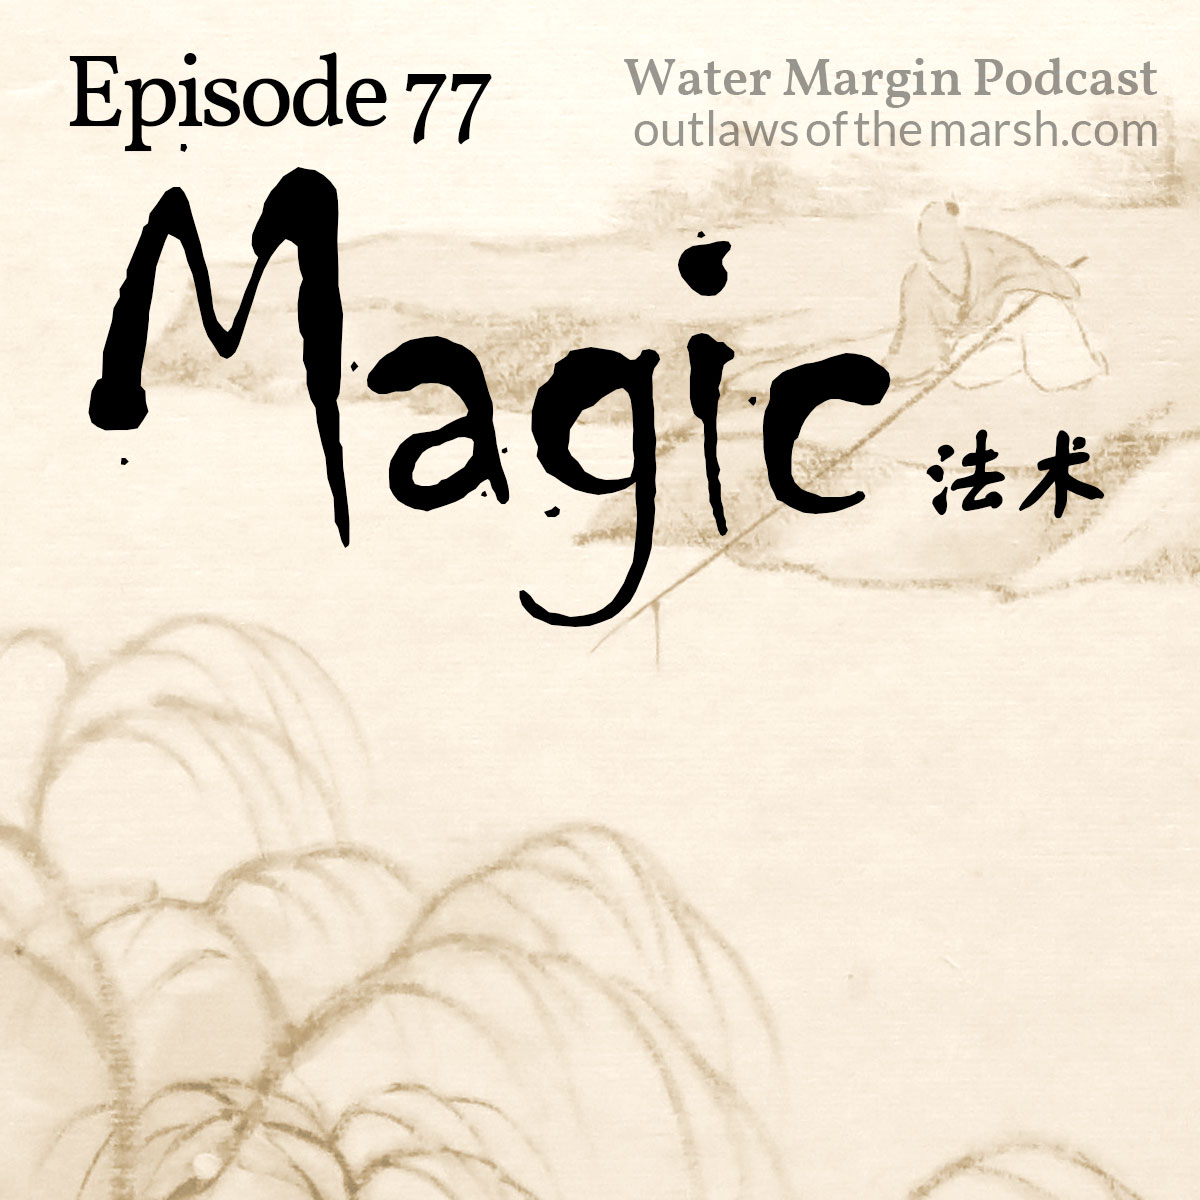 Water Margin Podcast: Episode 077